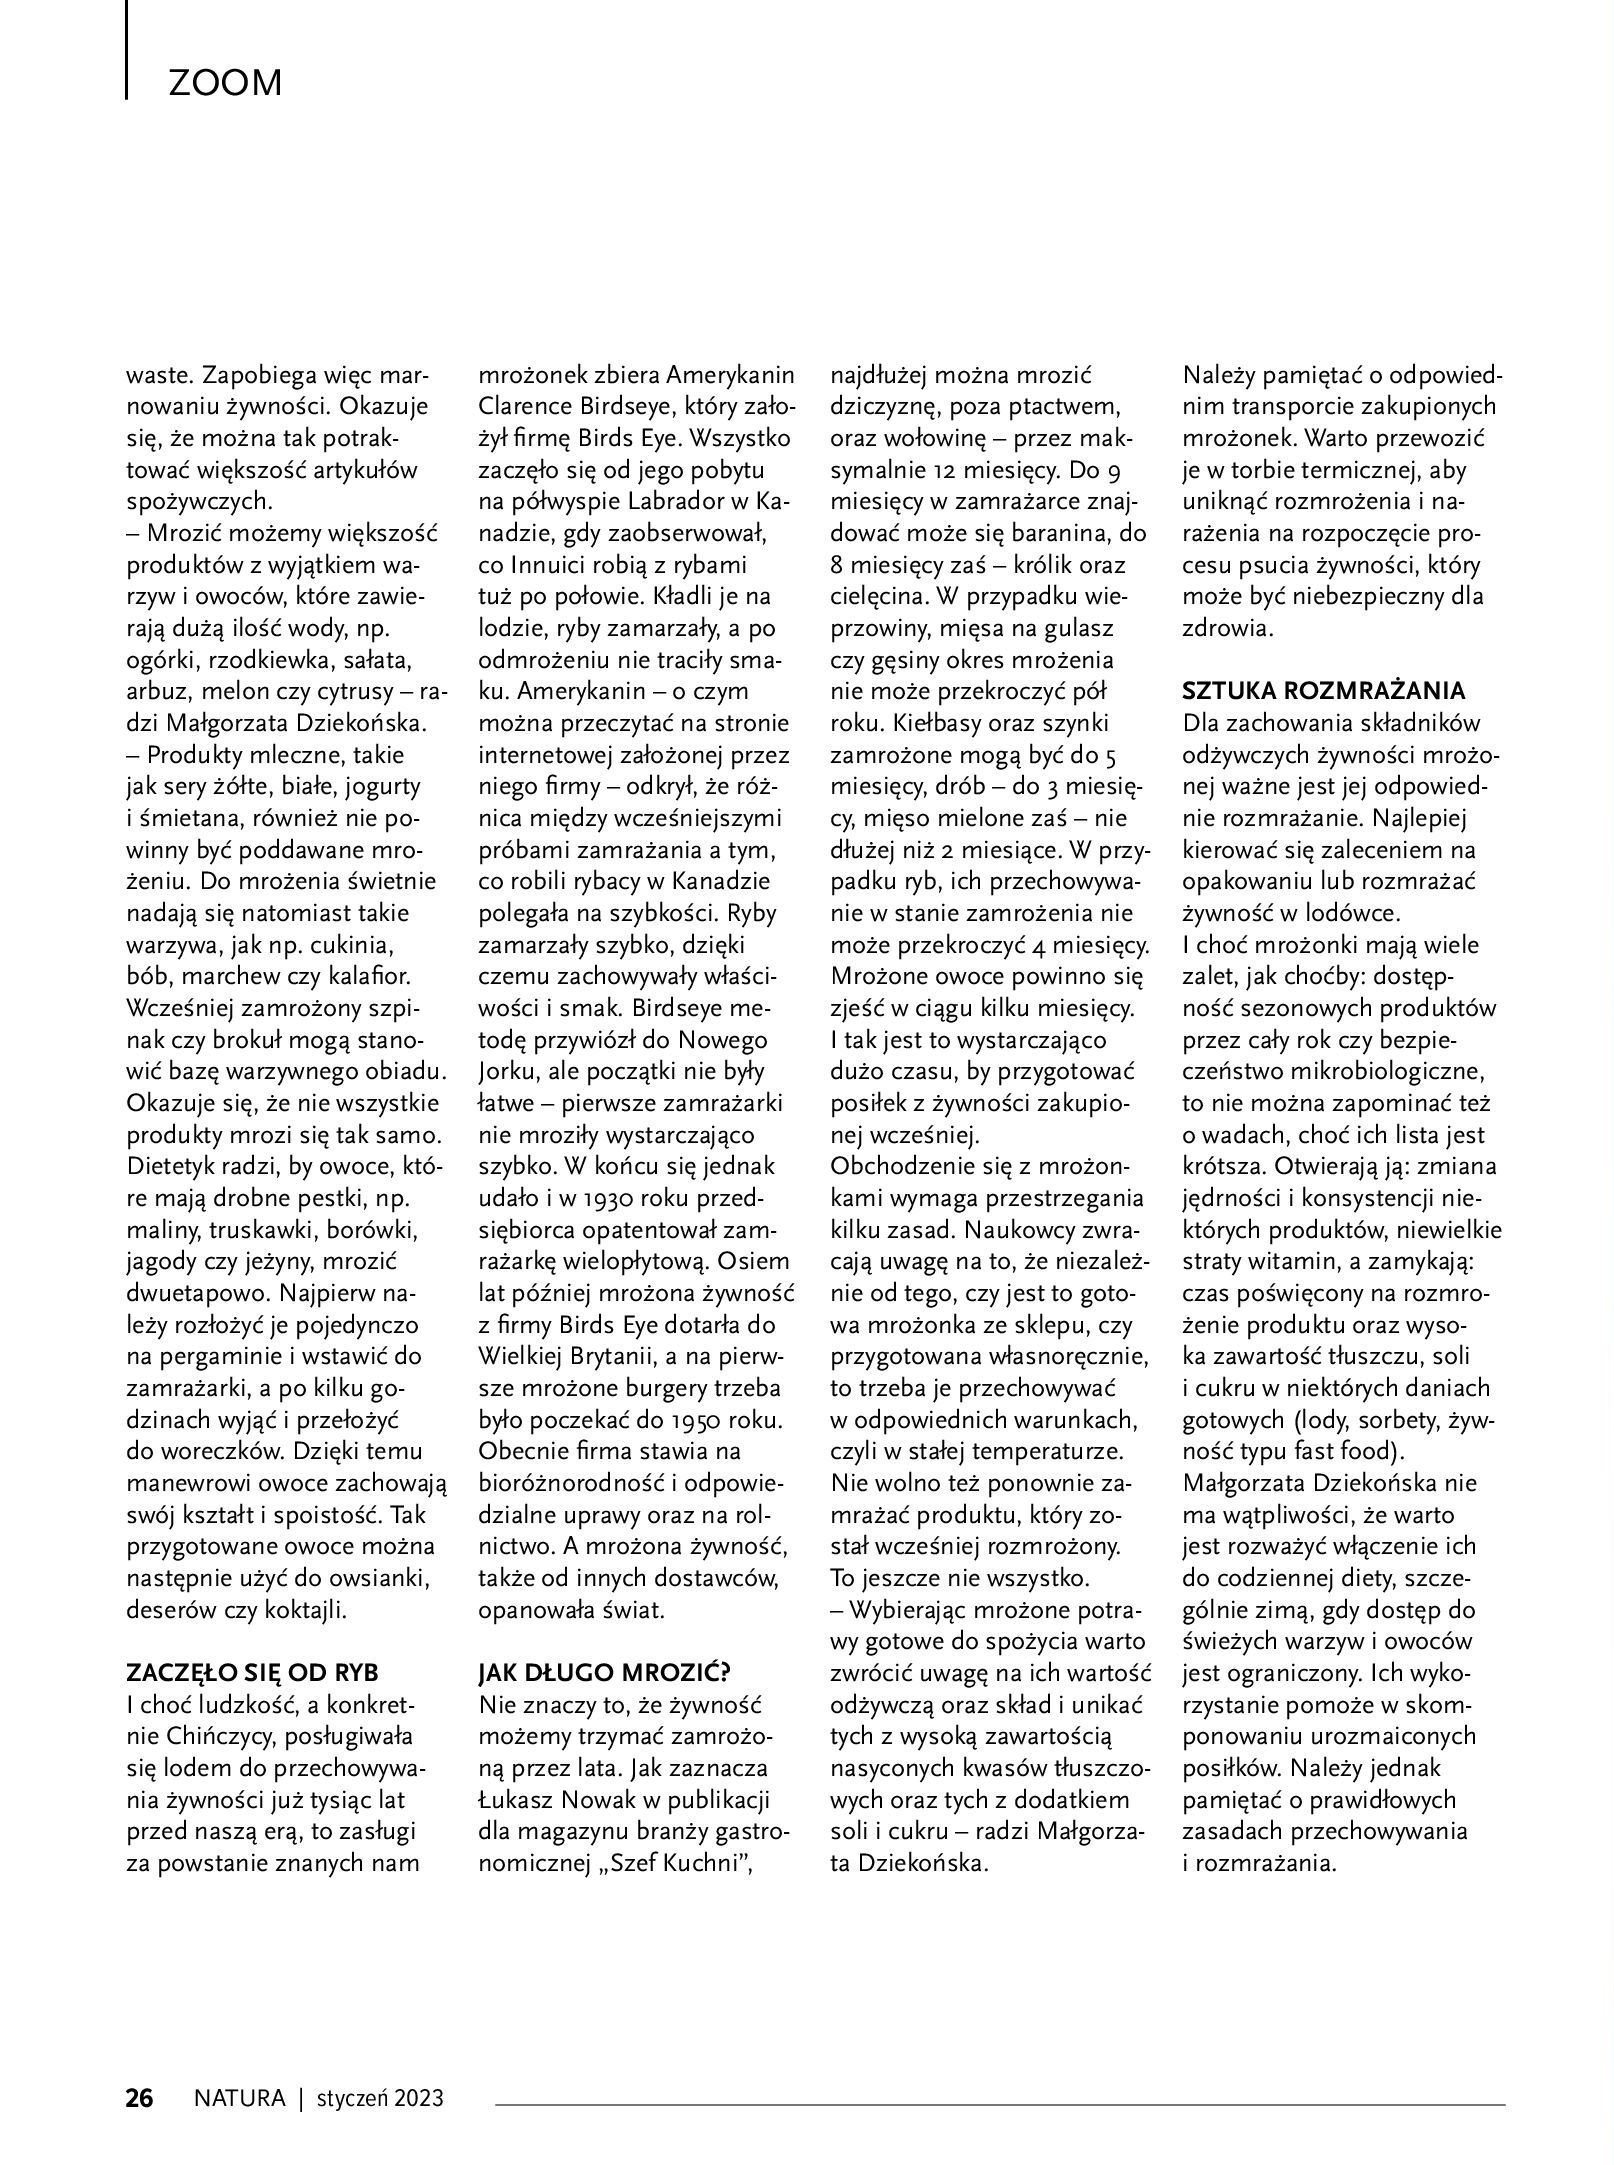 Gazetka Drogerie Natura: Magazyn Drogerie Natura - Styczeń 2023 2023-01-01 page-26